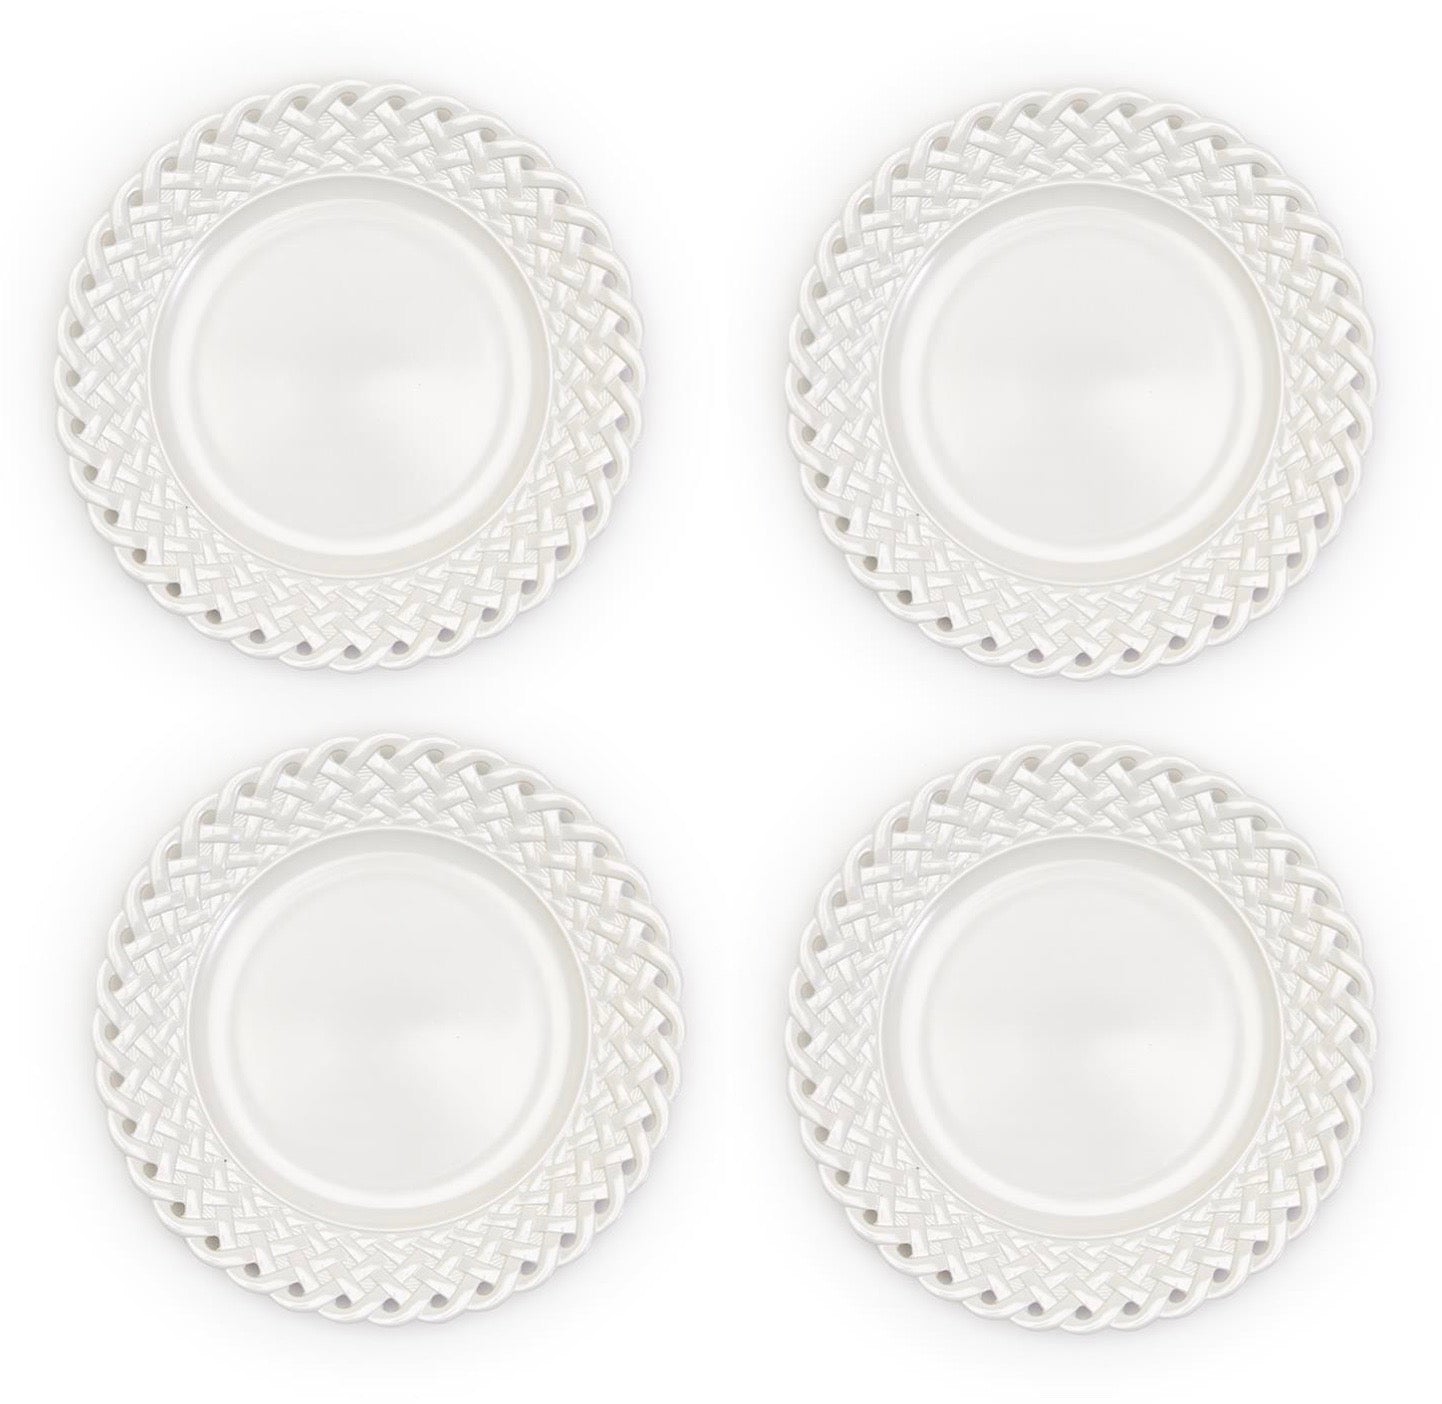 White Lattice Melamine Plates - Set of 4